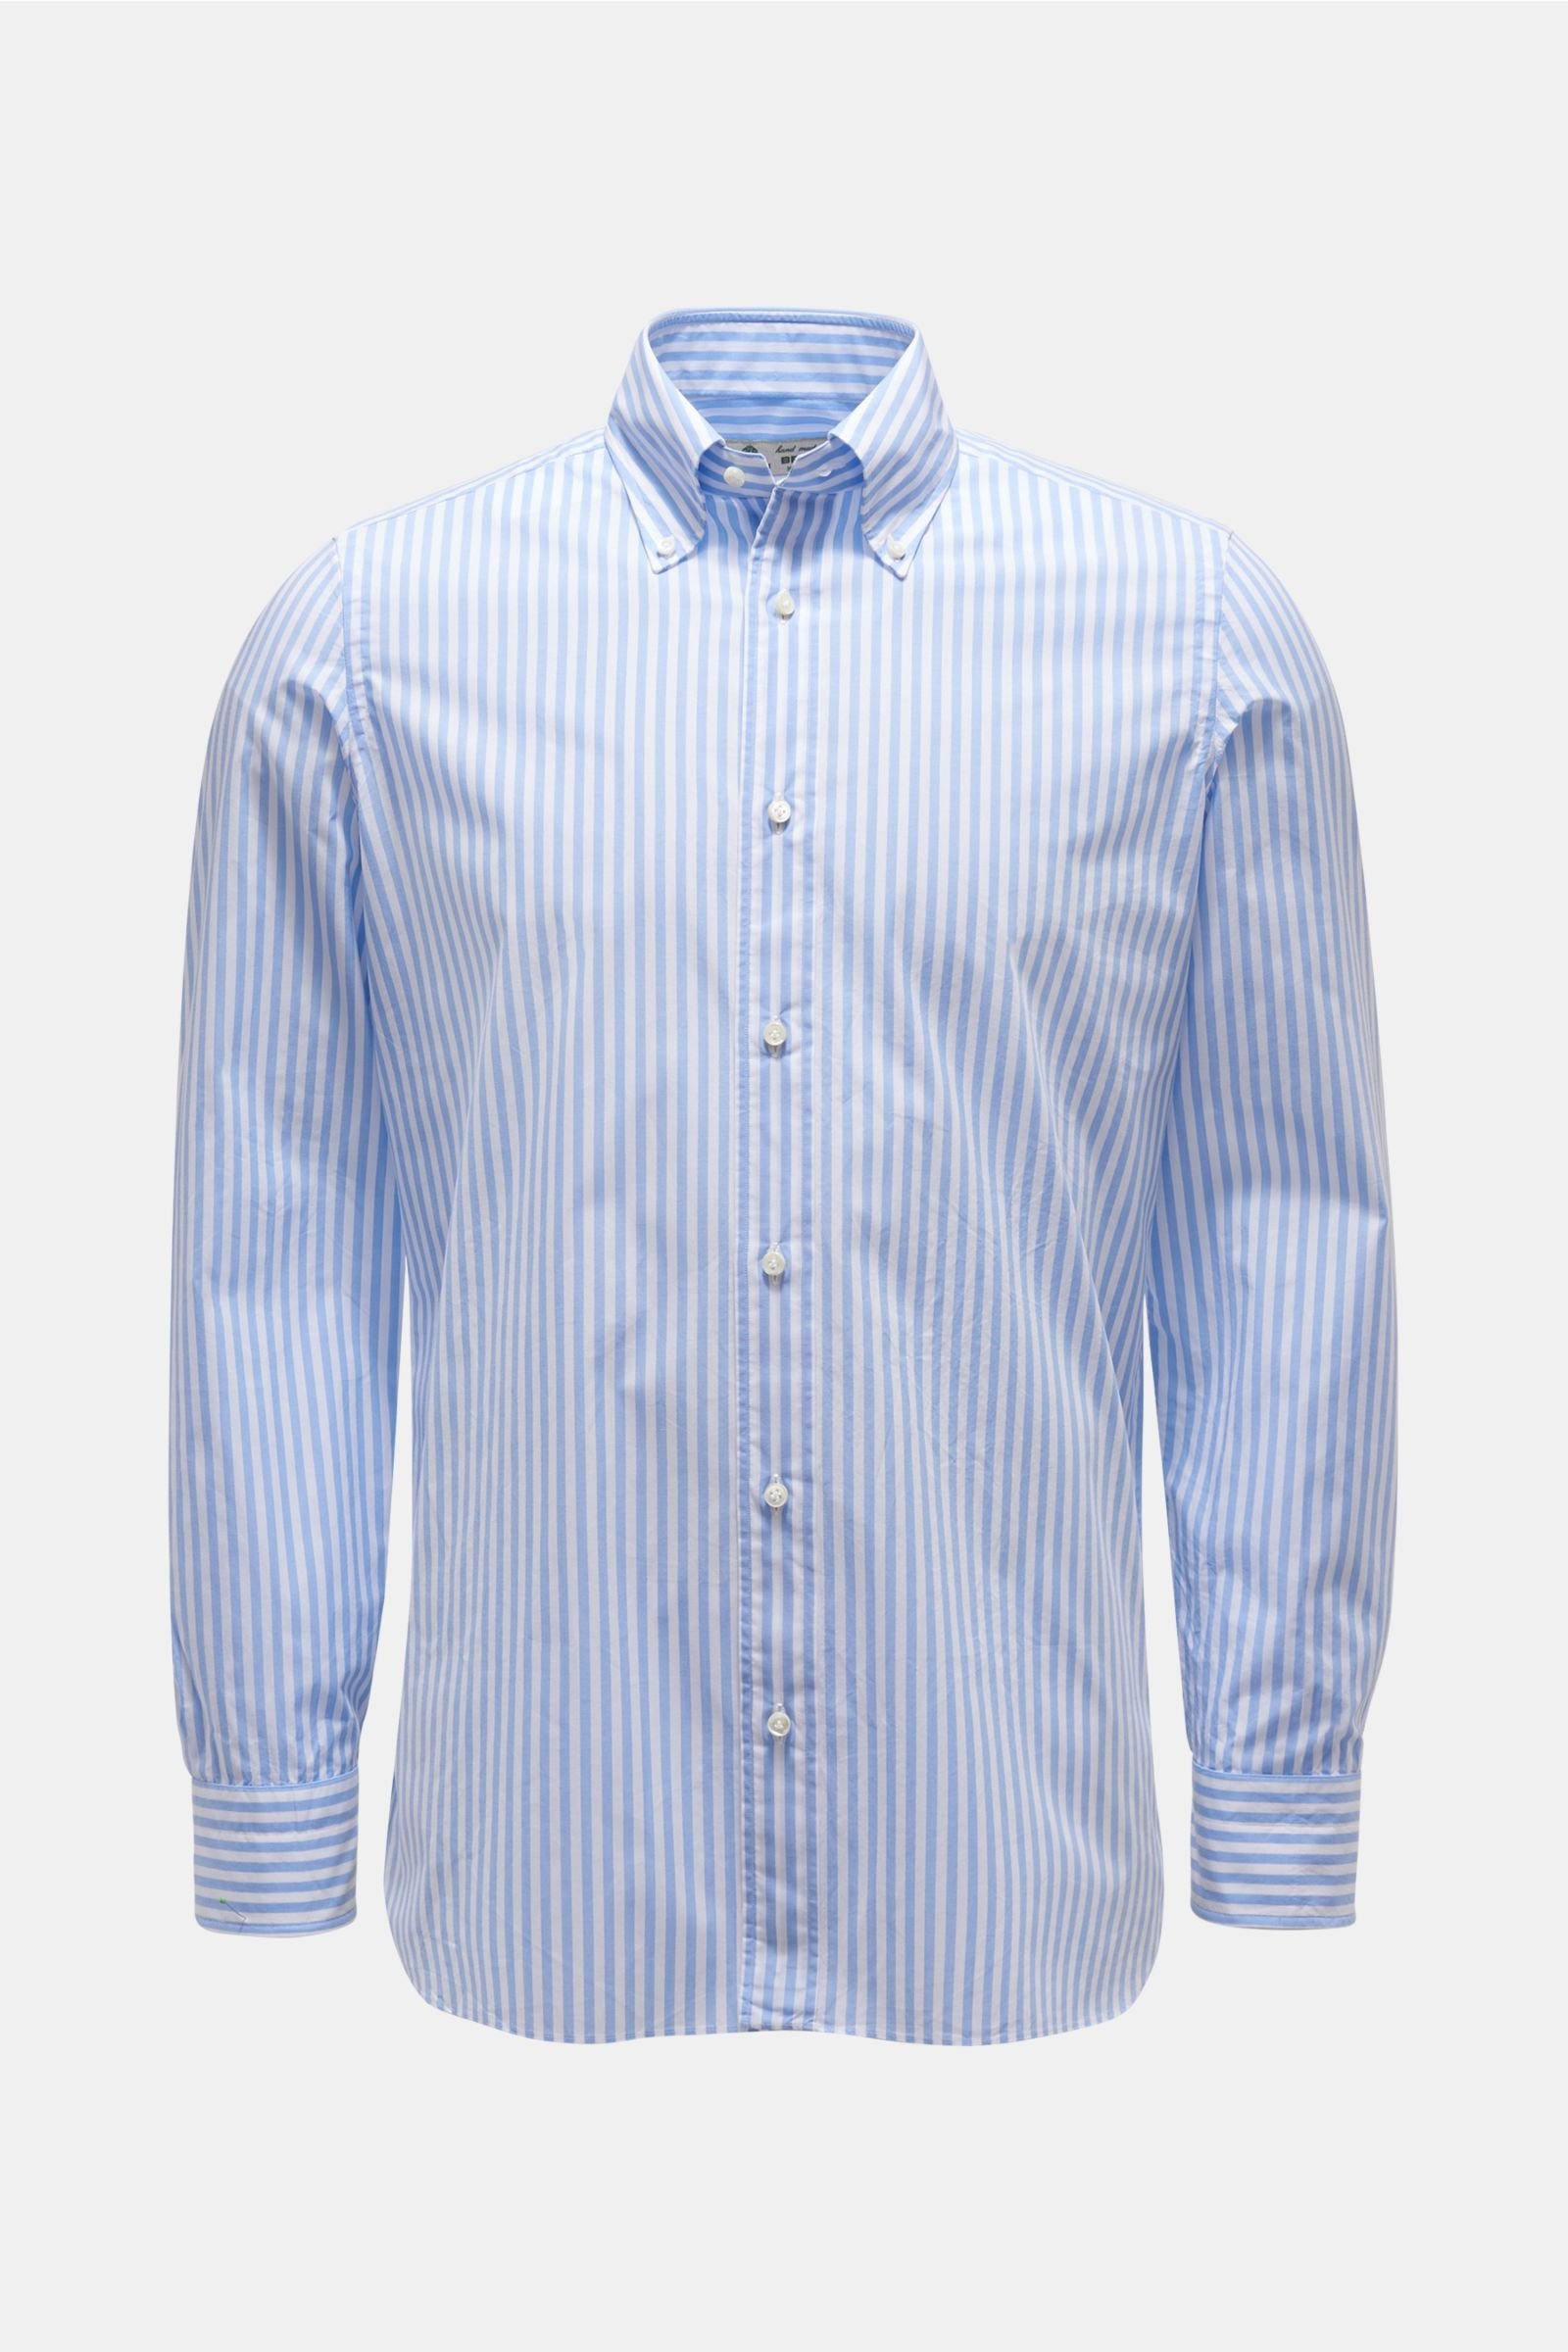 Casual shirt button-down collar light blue/white striped